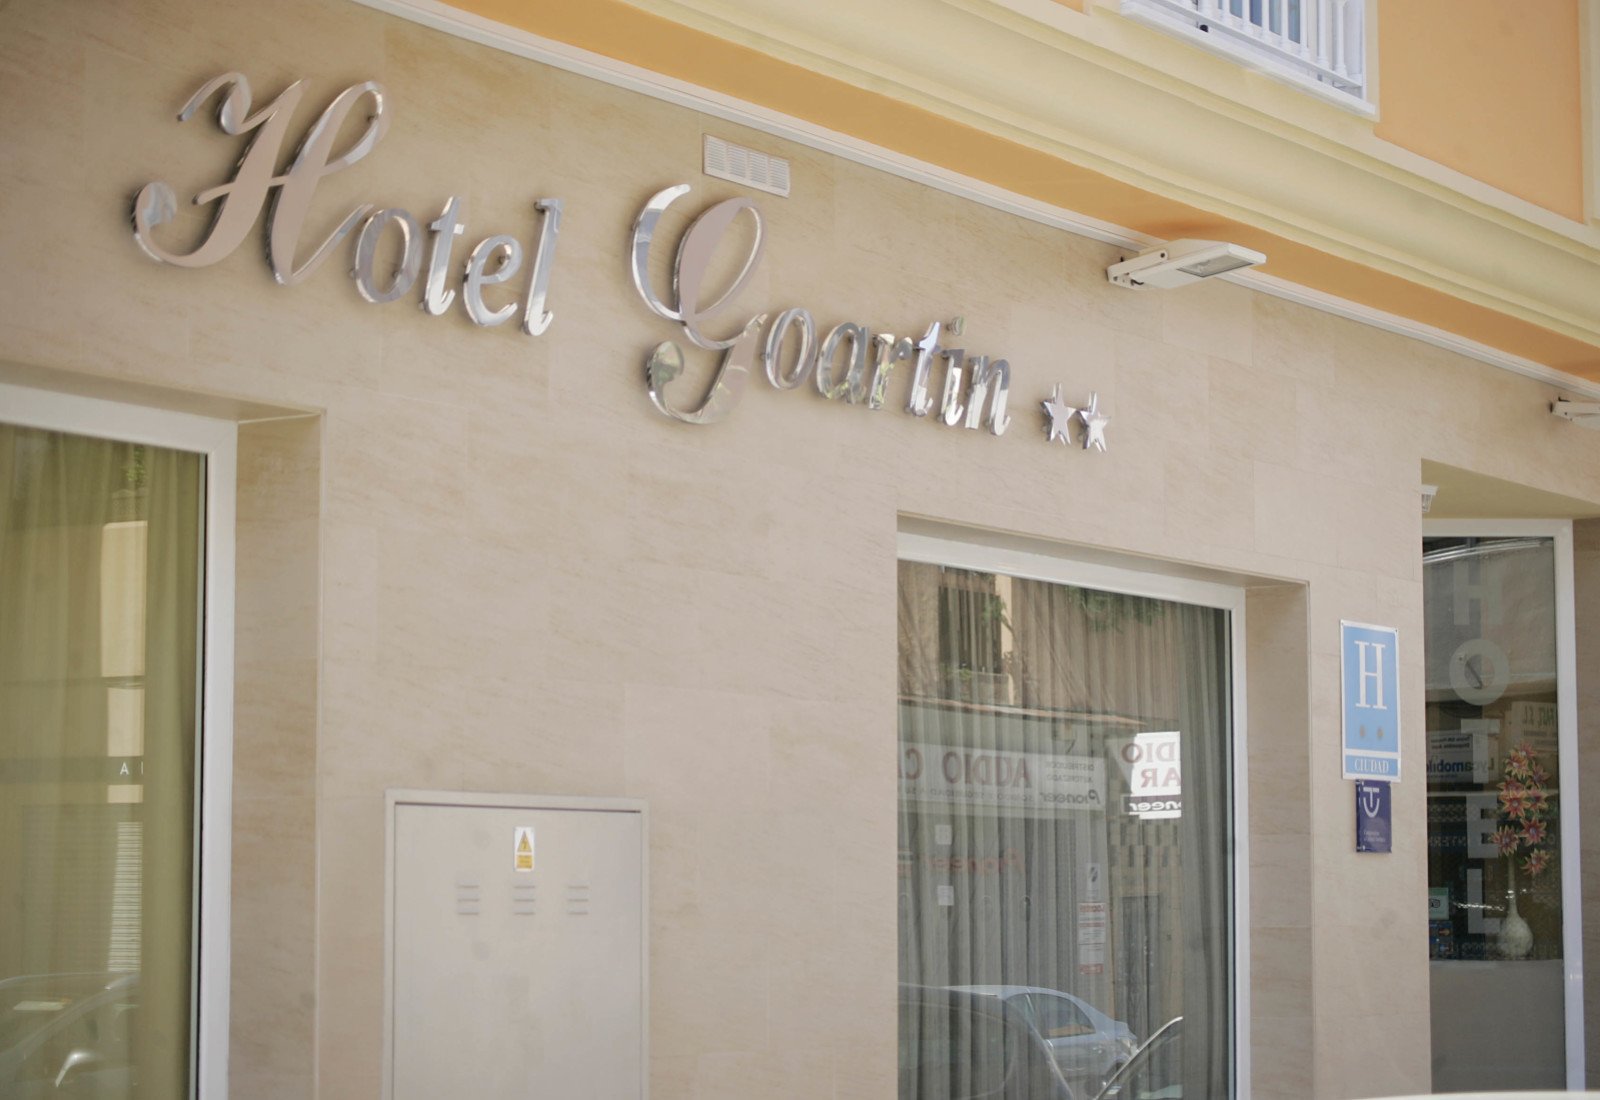 Visit our Goartin hotel in Malaga